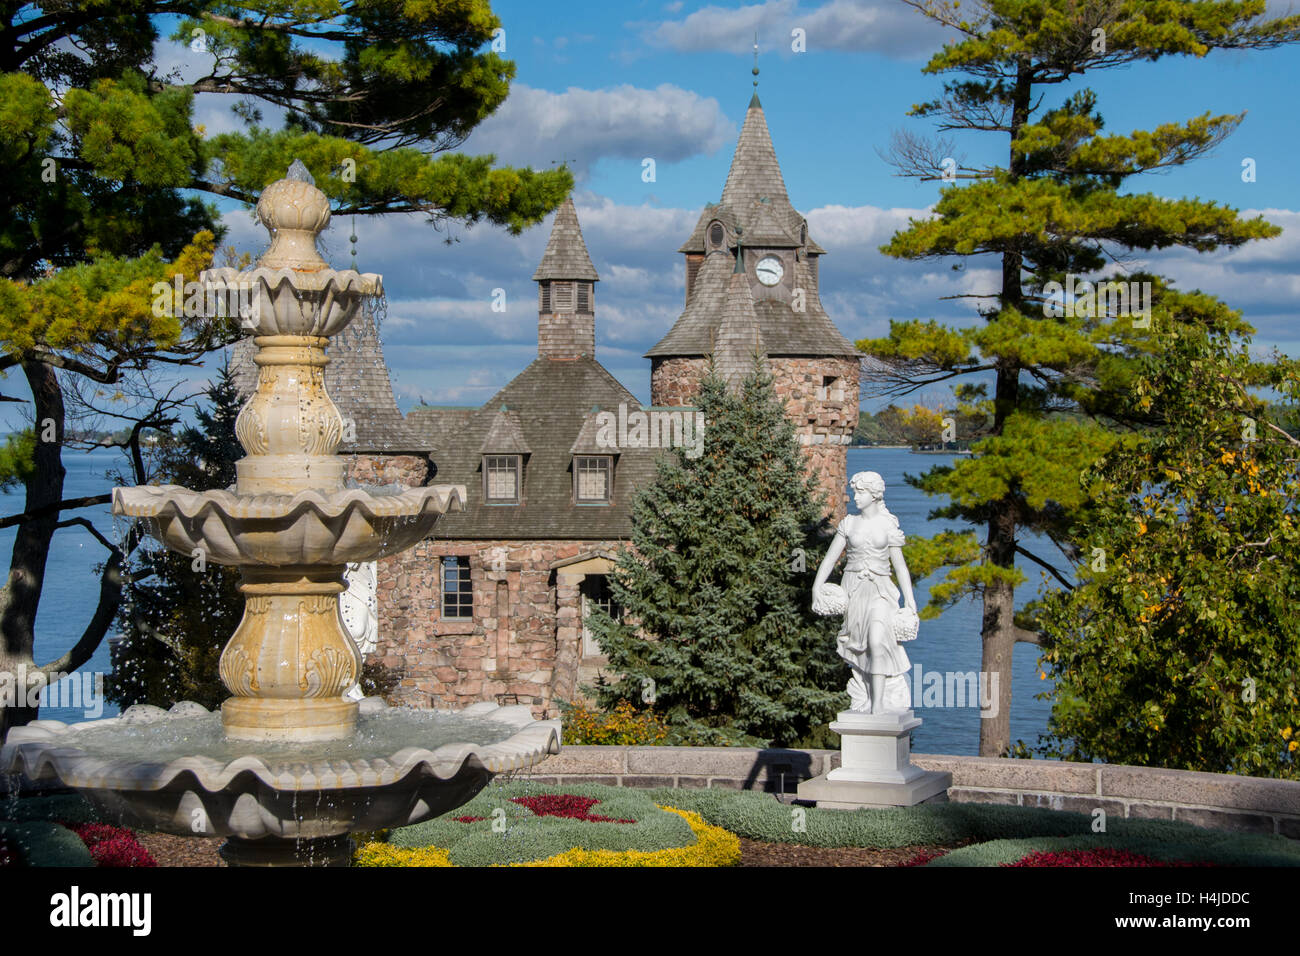 New York, St. Lawrence Seaway, Thousand Islands, Alexandria Bay. Historic Boldt Castle on Heart Island. Italian Garden fountain. Stock Photo